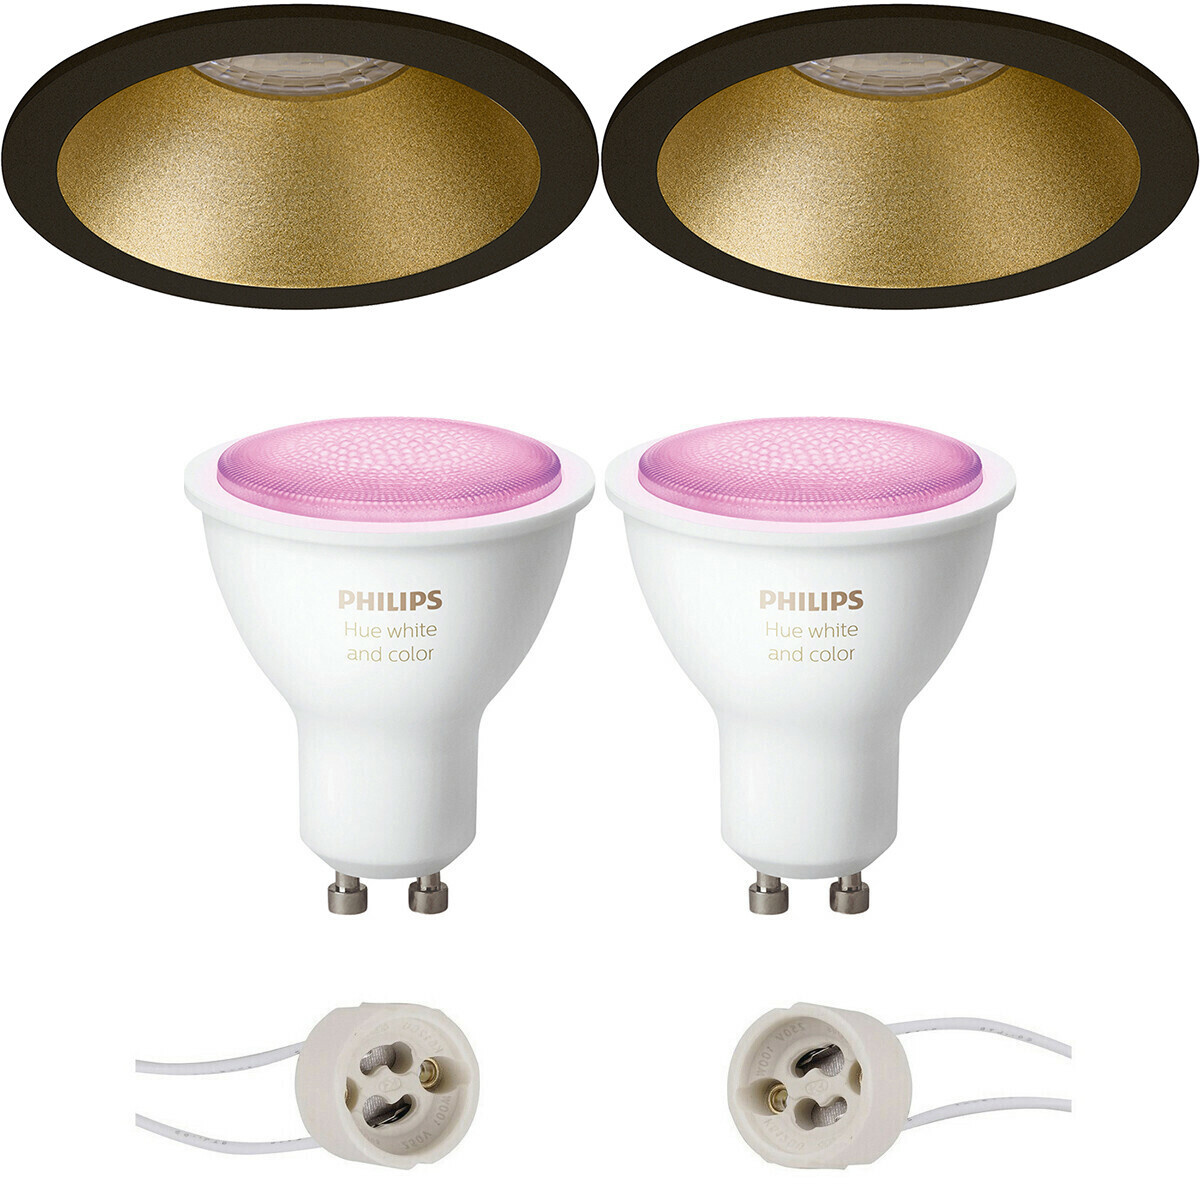 BES LED Pragmi Pollon Pro - Inbouw Rond - Mat Zwart/Goud - Verdiept - Ø82mm - Philips Hue - LED Spot Set GU10 - White and Color Ambiance - Bluetooth